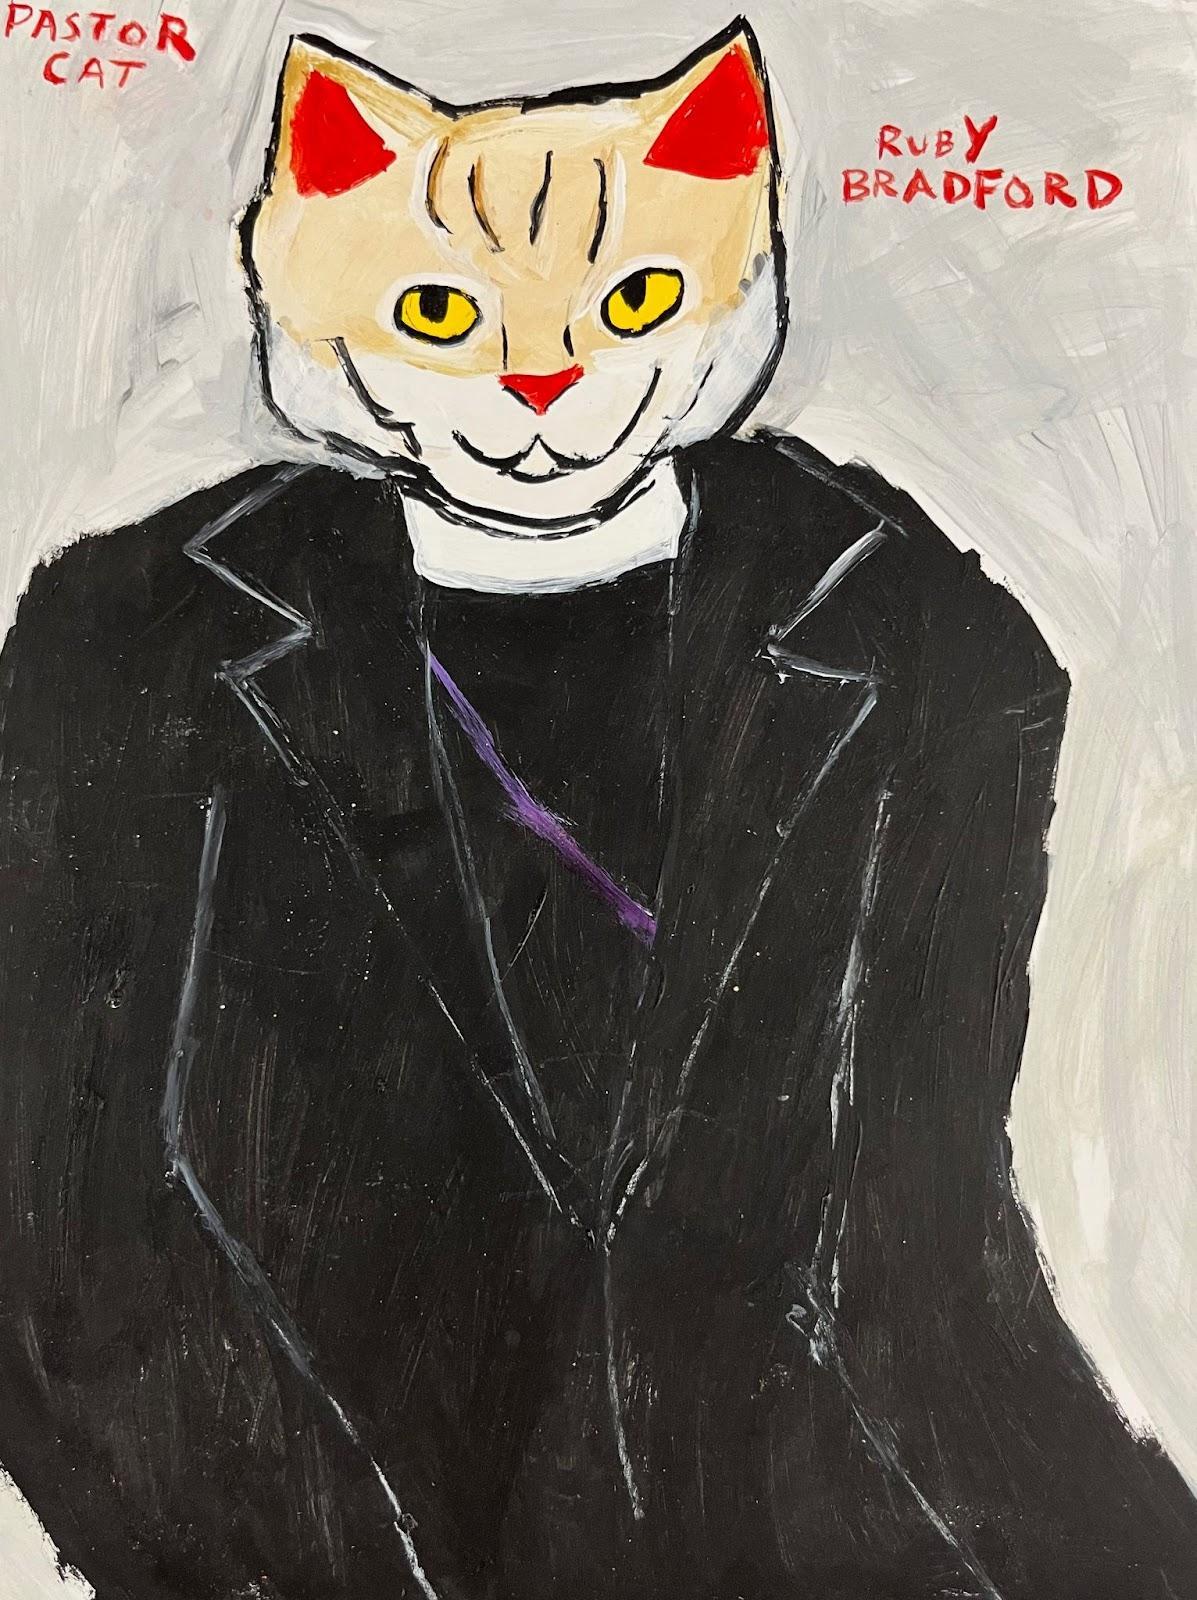 Ruby Bradford, Pastor Cat I, 2022, acrylic on illustration board, 14” x 11”